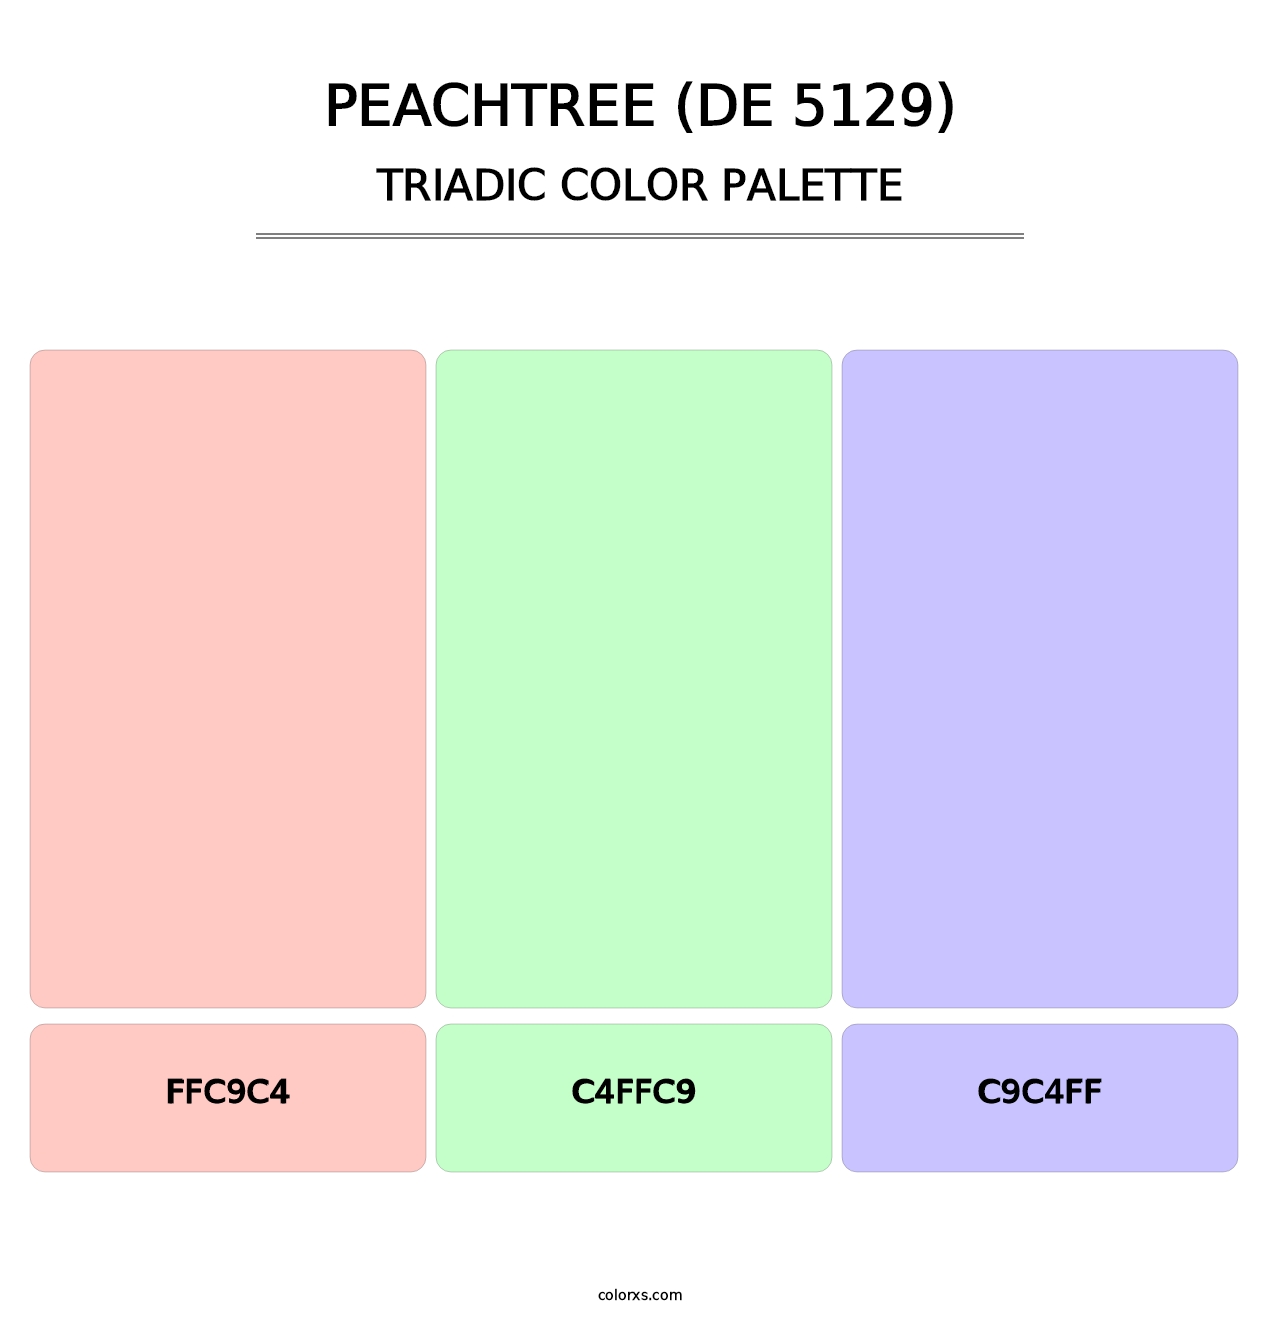 Peachtree (DE 5129) - Triadic Color Palette